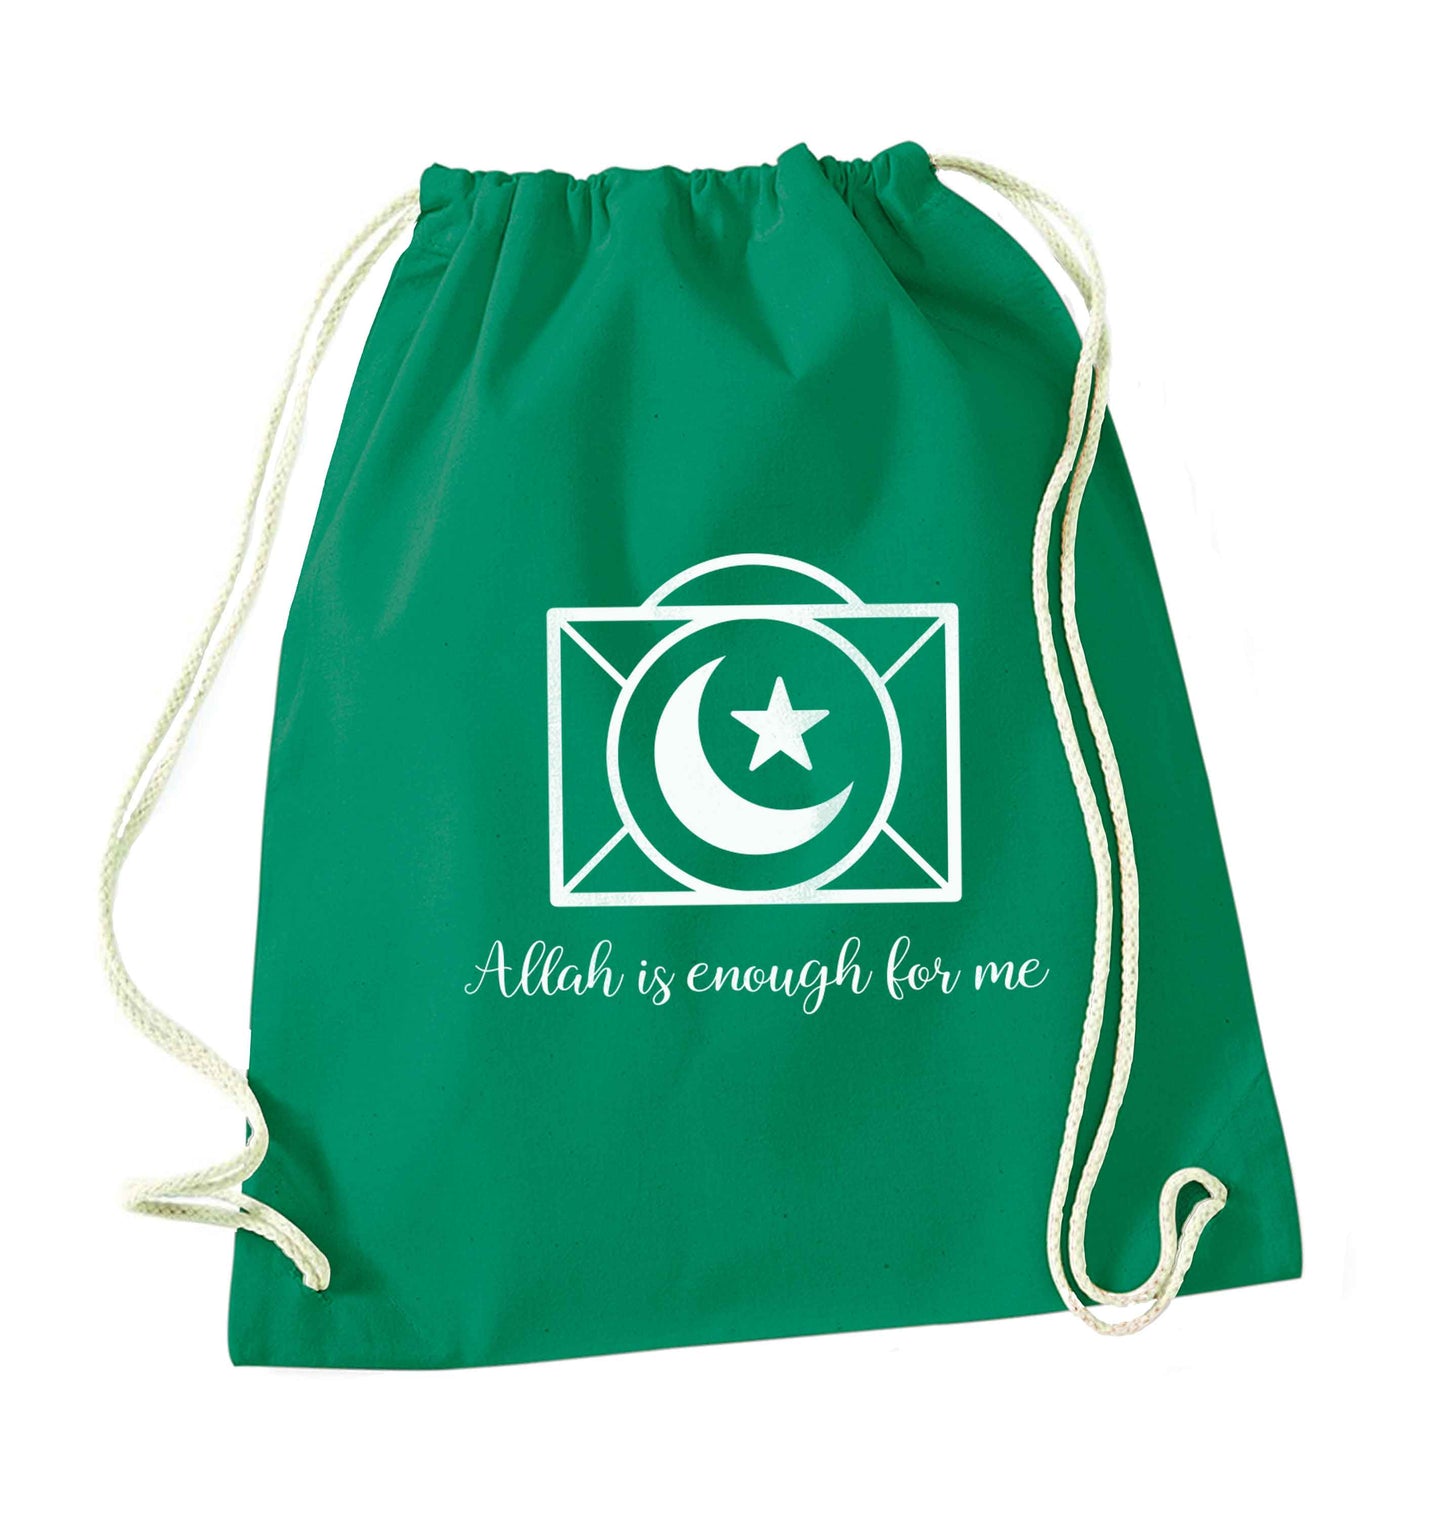 Allah is enough for me green drawstring bag